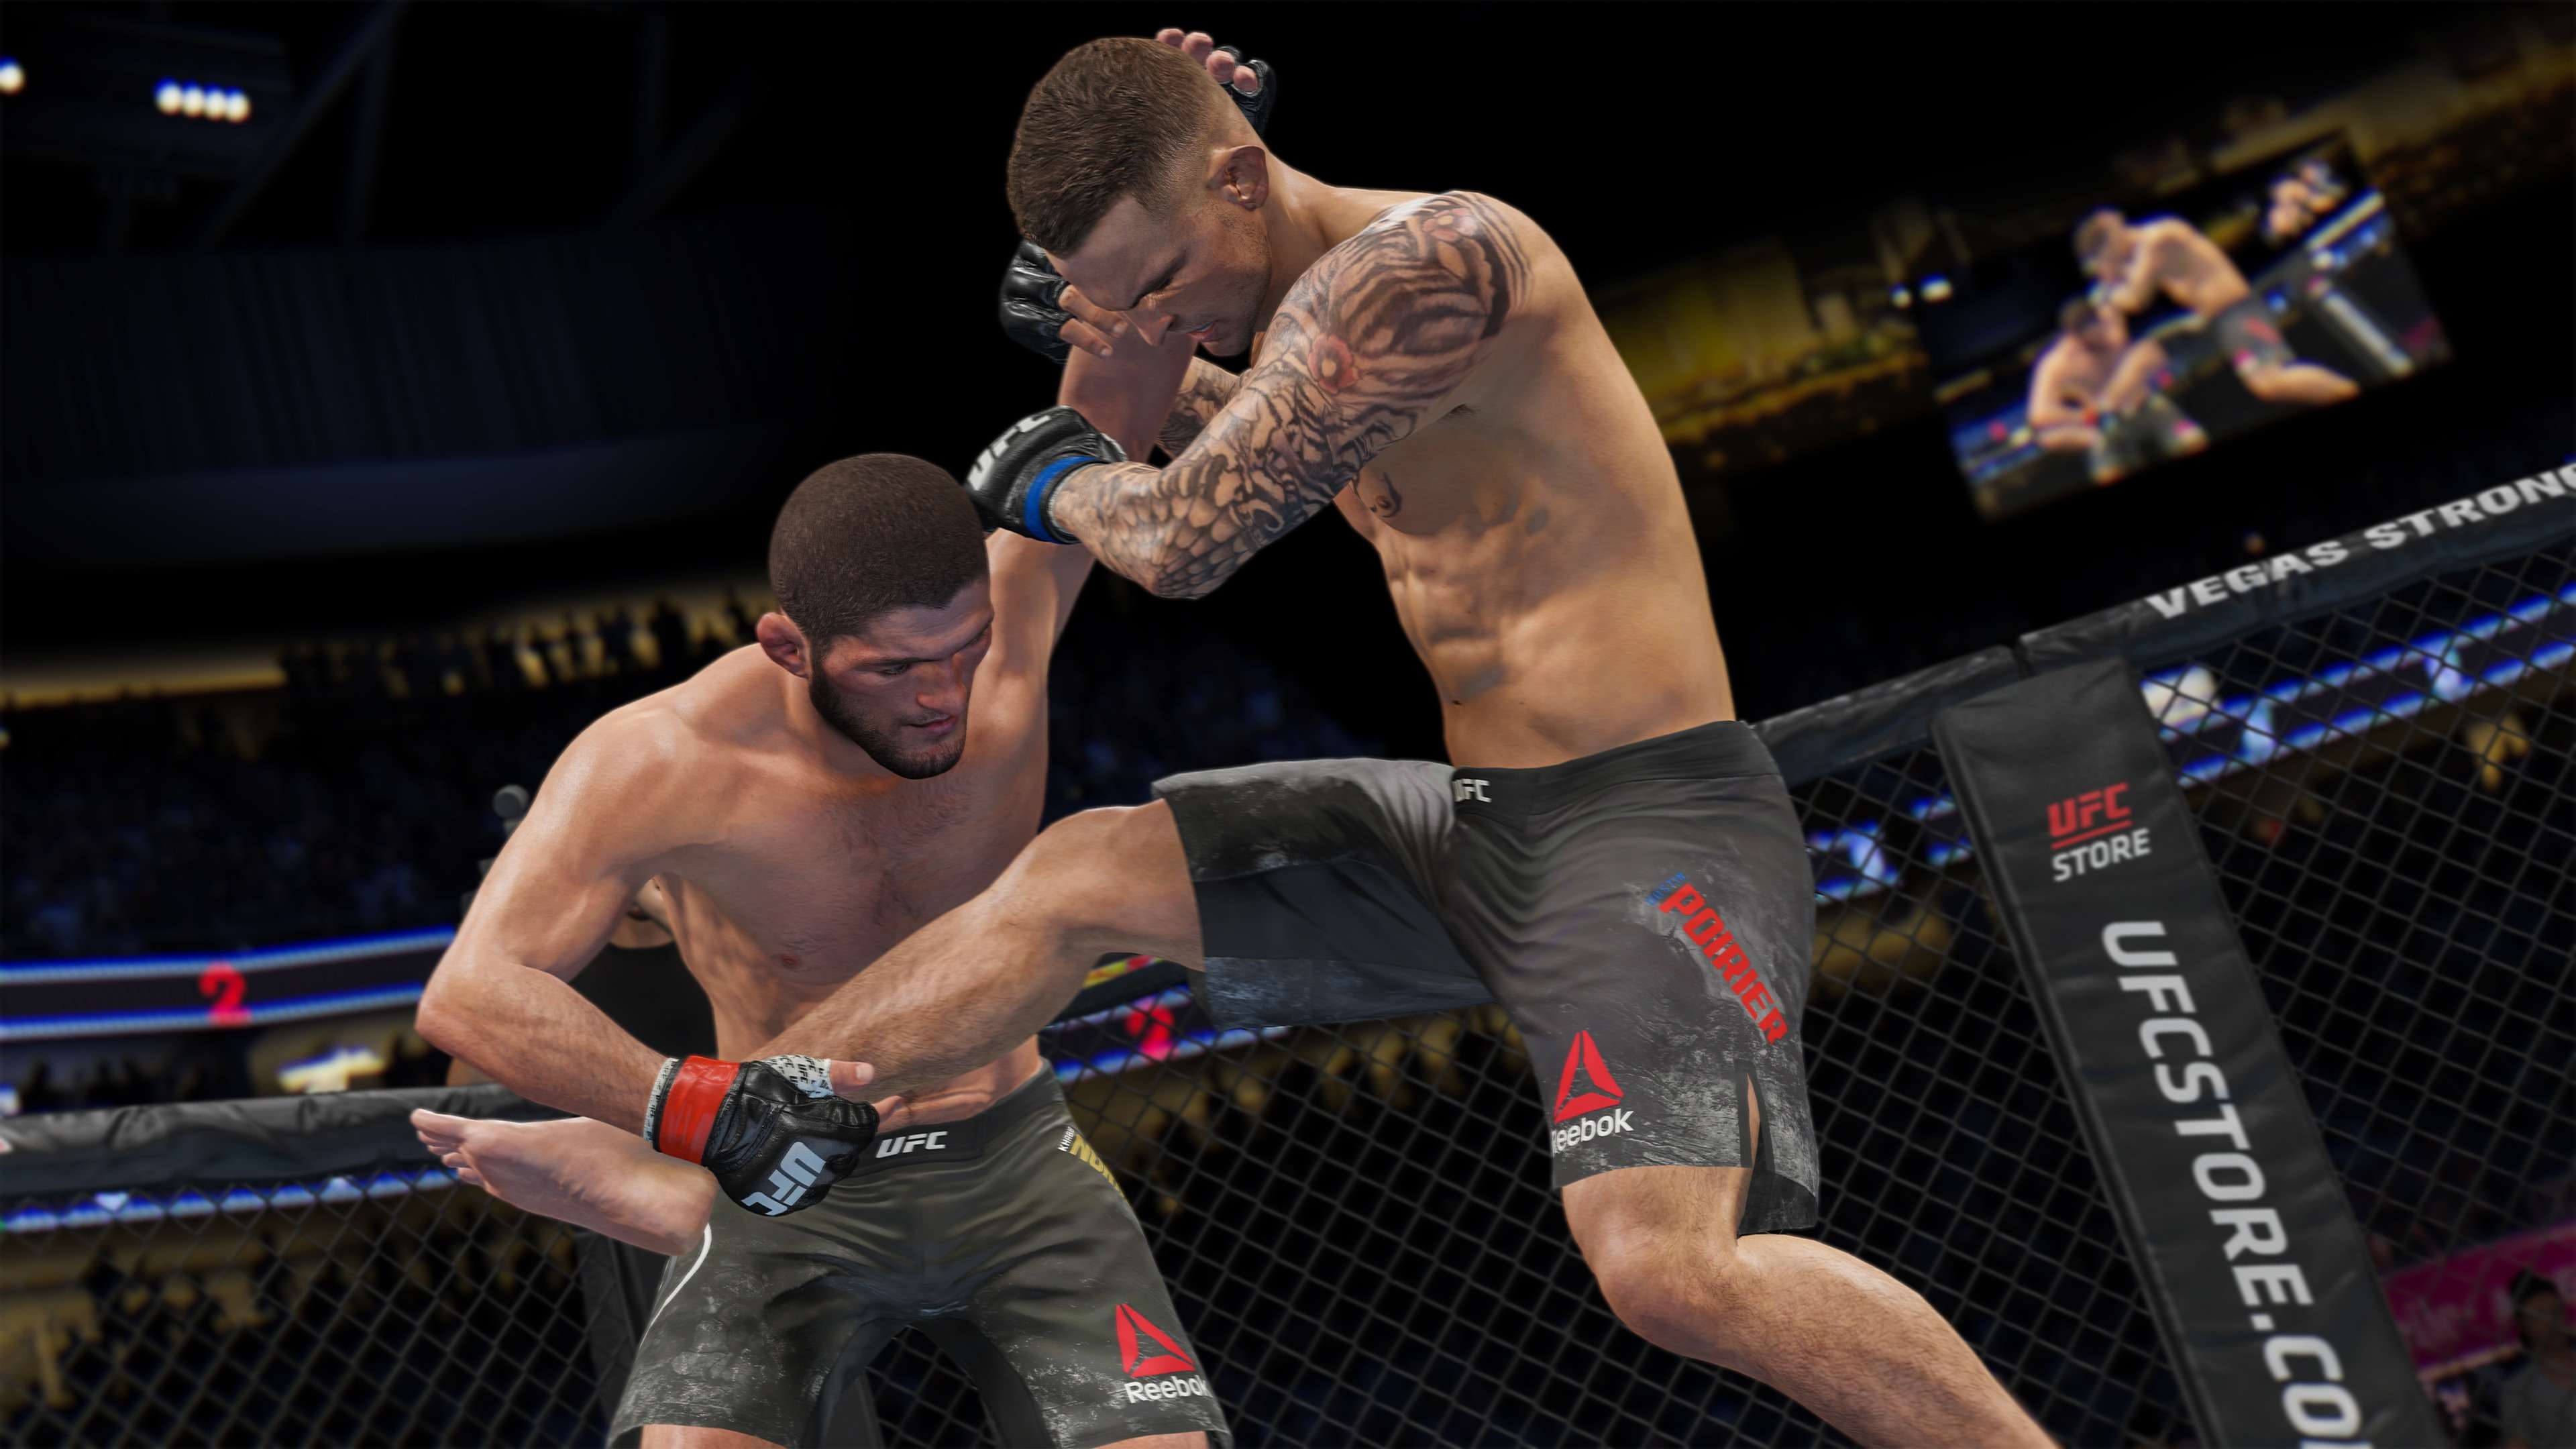 UFC 4 gameplay footage